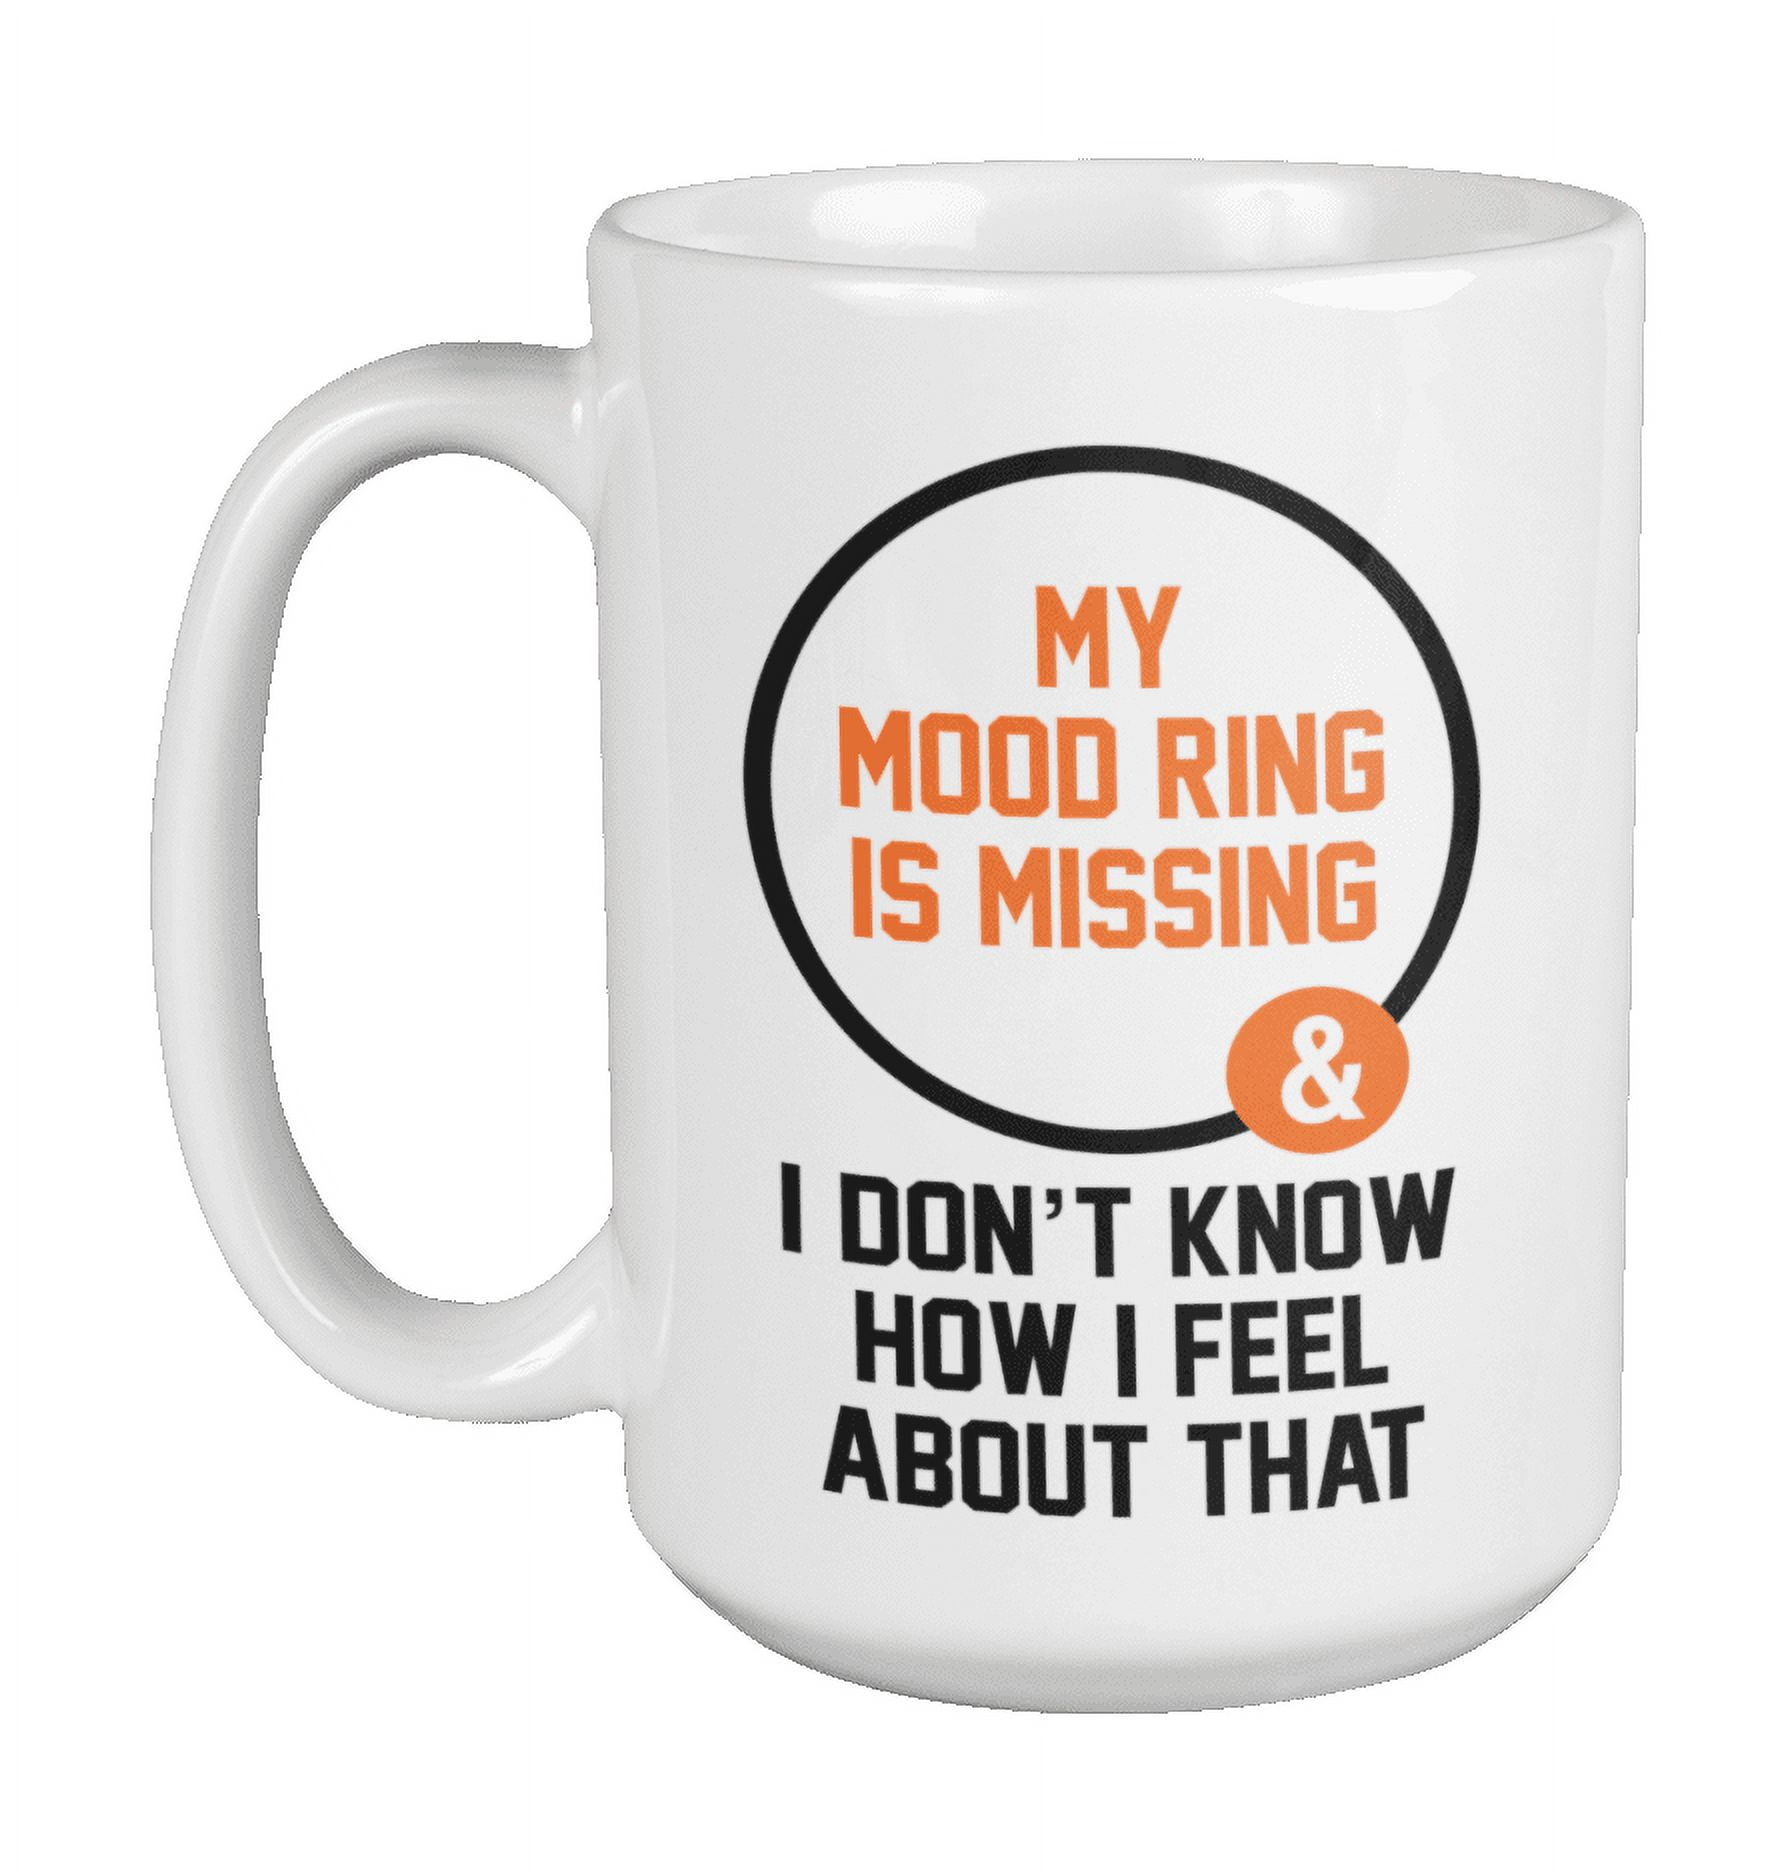 Mom, I Love You Loads Funny Coffee or Tea Mug – Neurons Not Included™